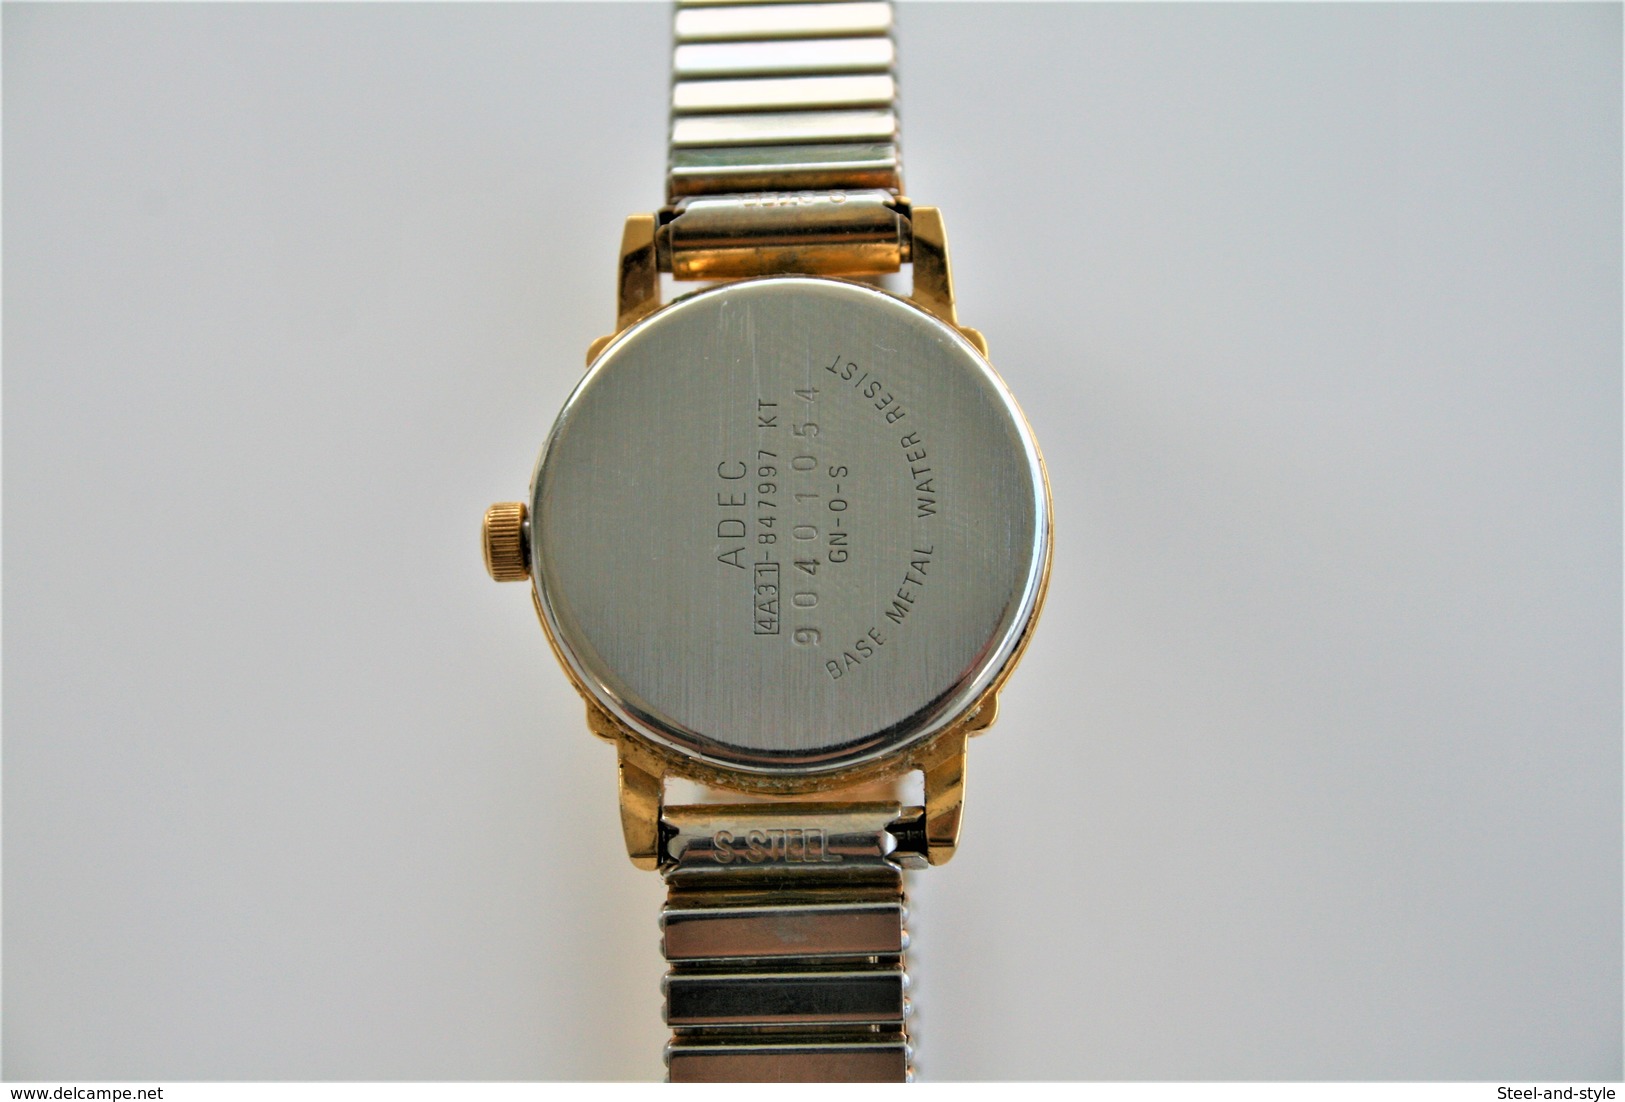 Sold at Auction: Lot 9 Seiko Tissot Adec Rado Men's Wrist Watches